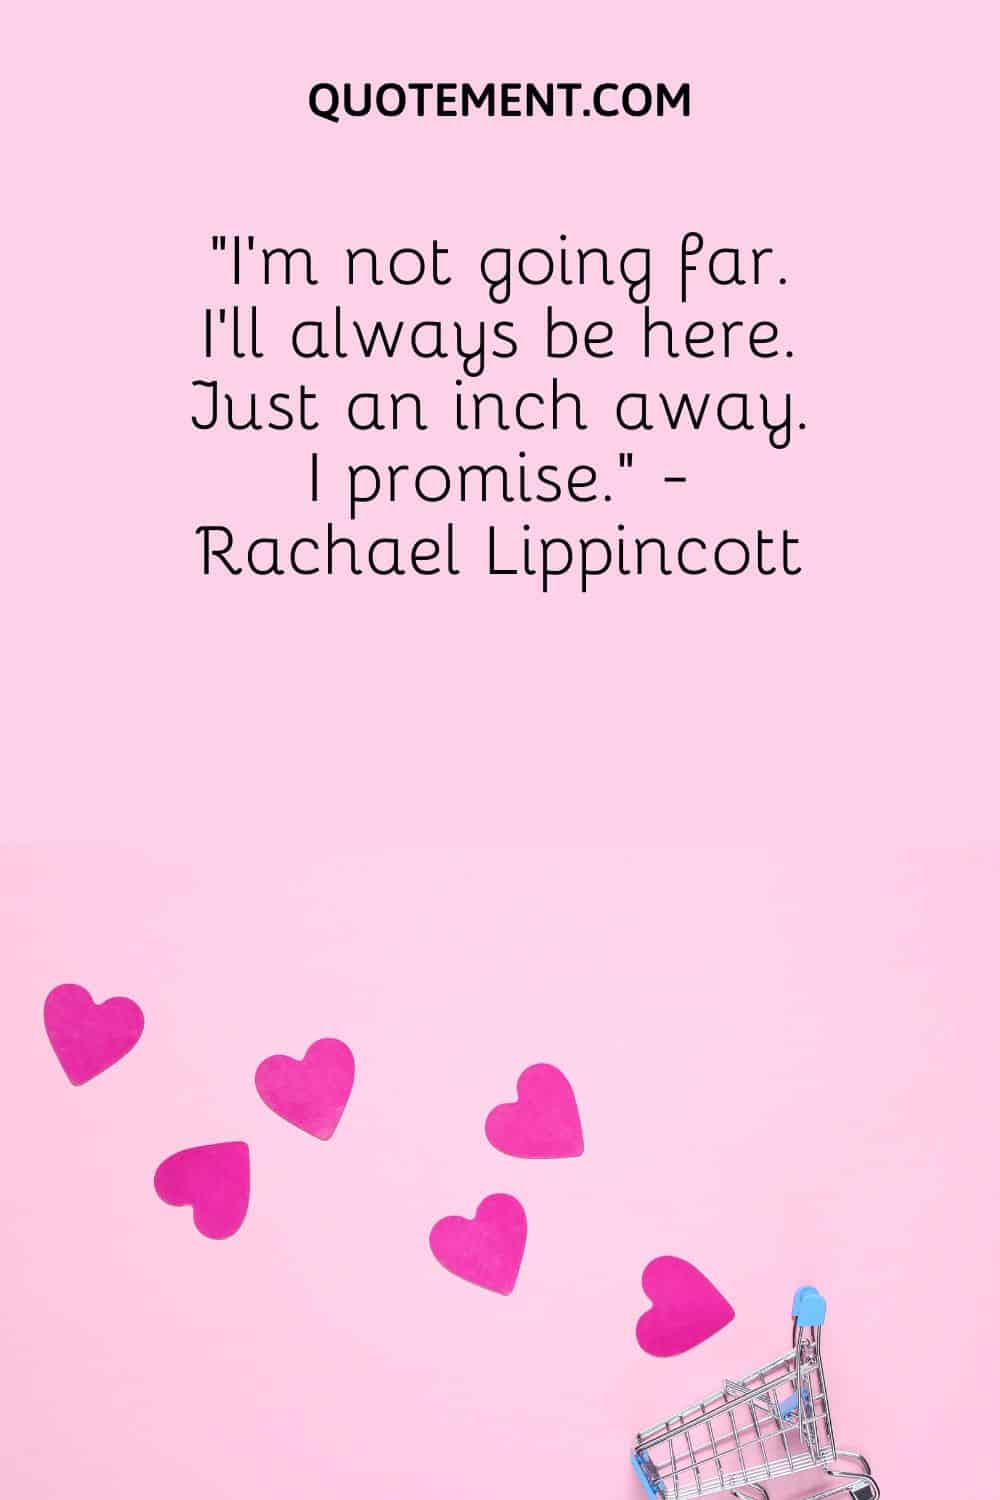 “I’m not going far. I’ll always be here. Just an inch away. I promise.” - Rachael Lippincott